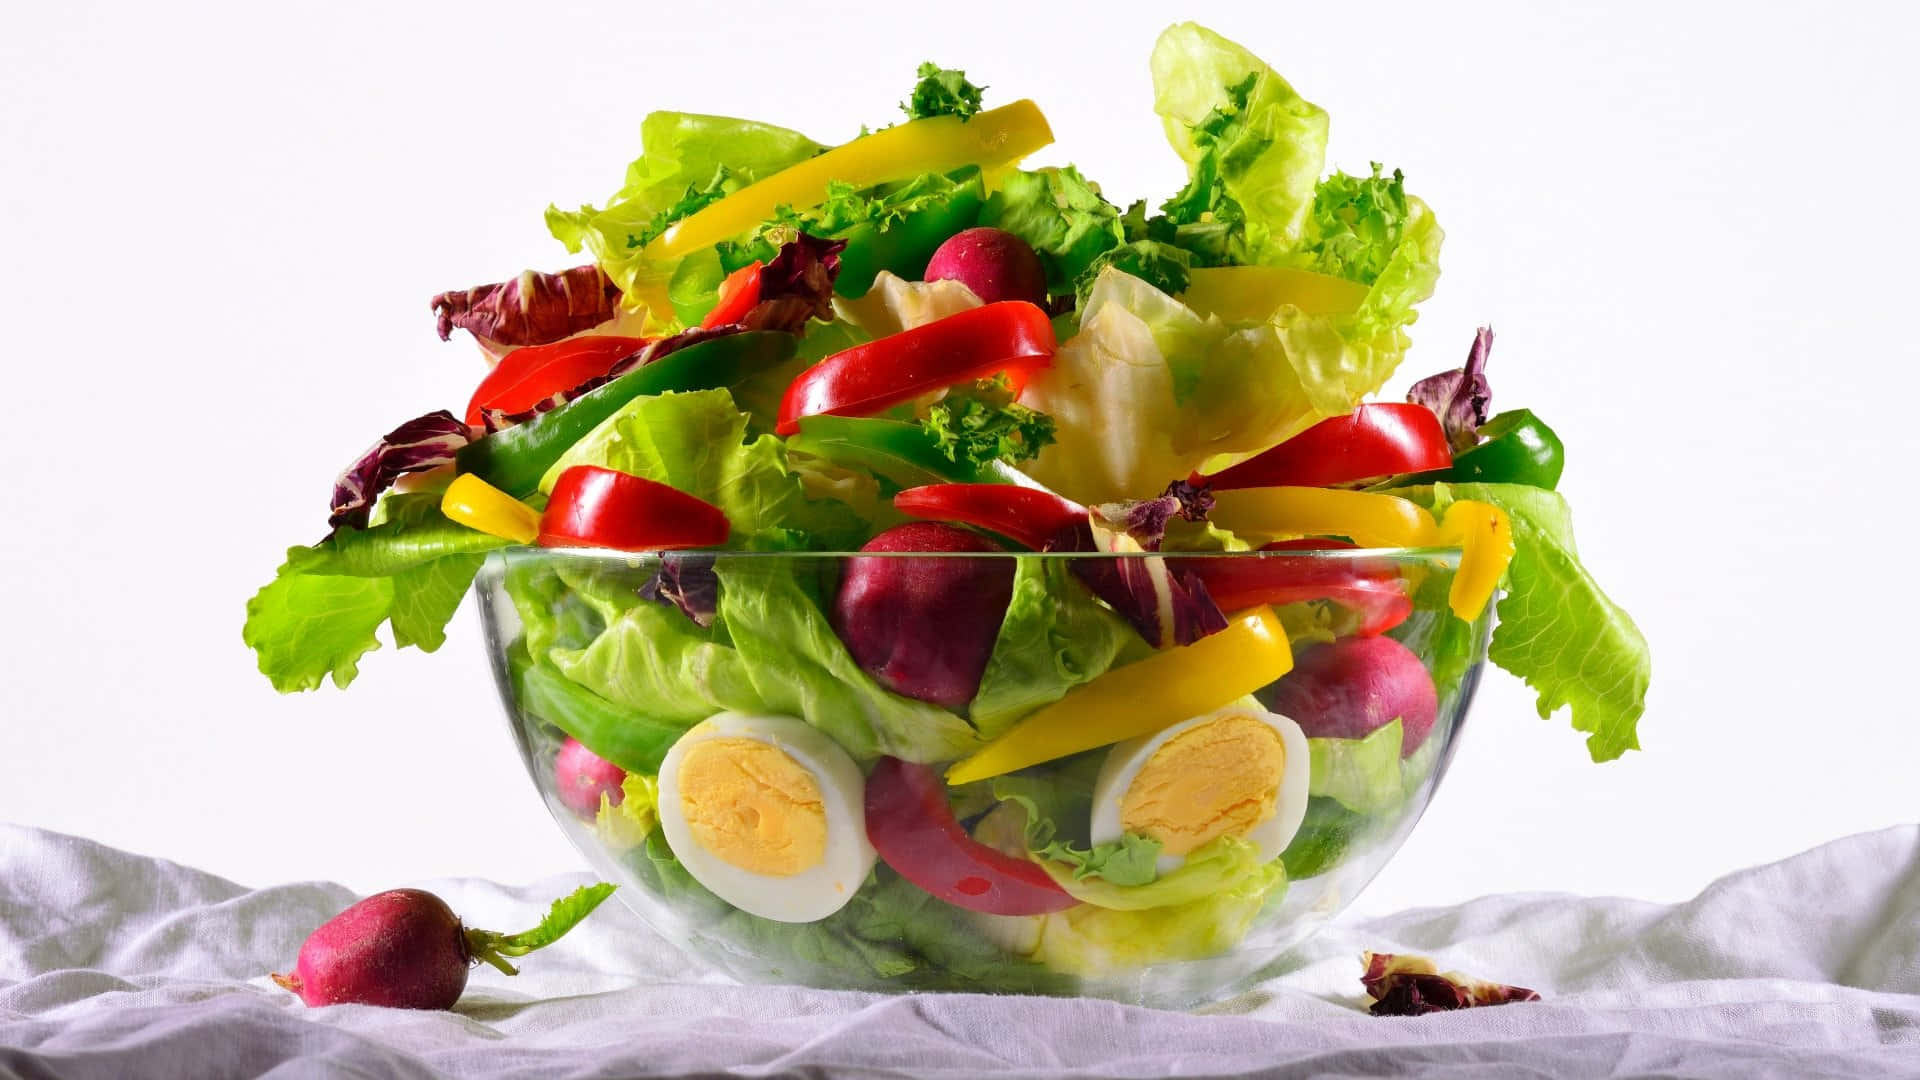 Healthy Garden Salad on Wooden Table